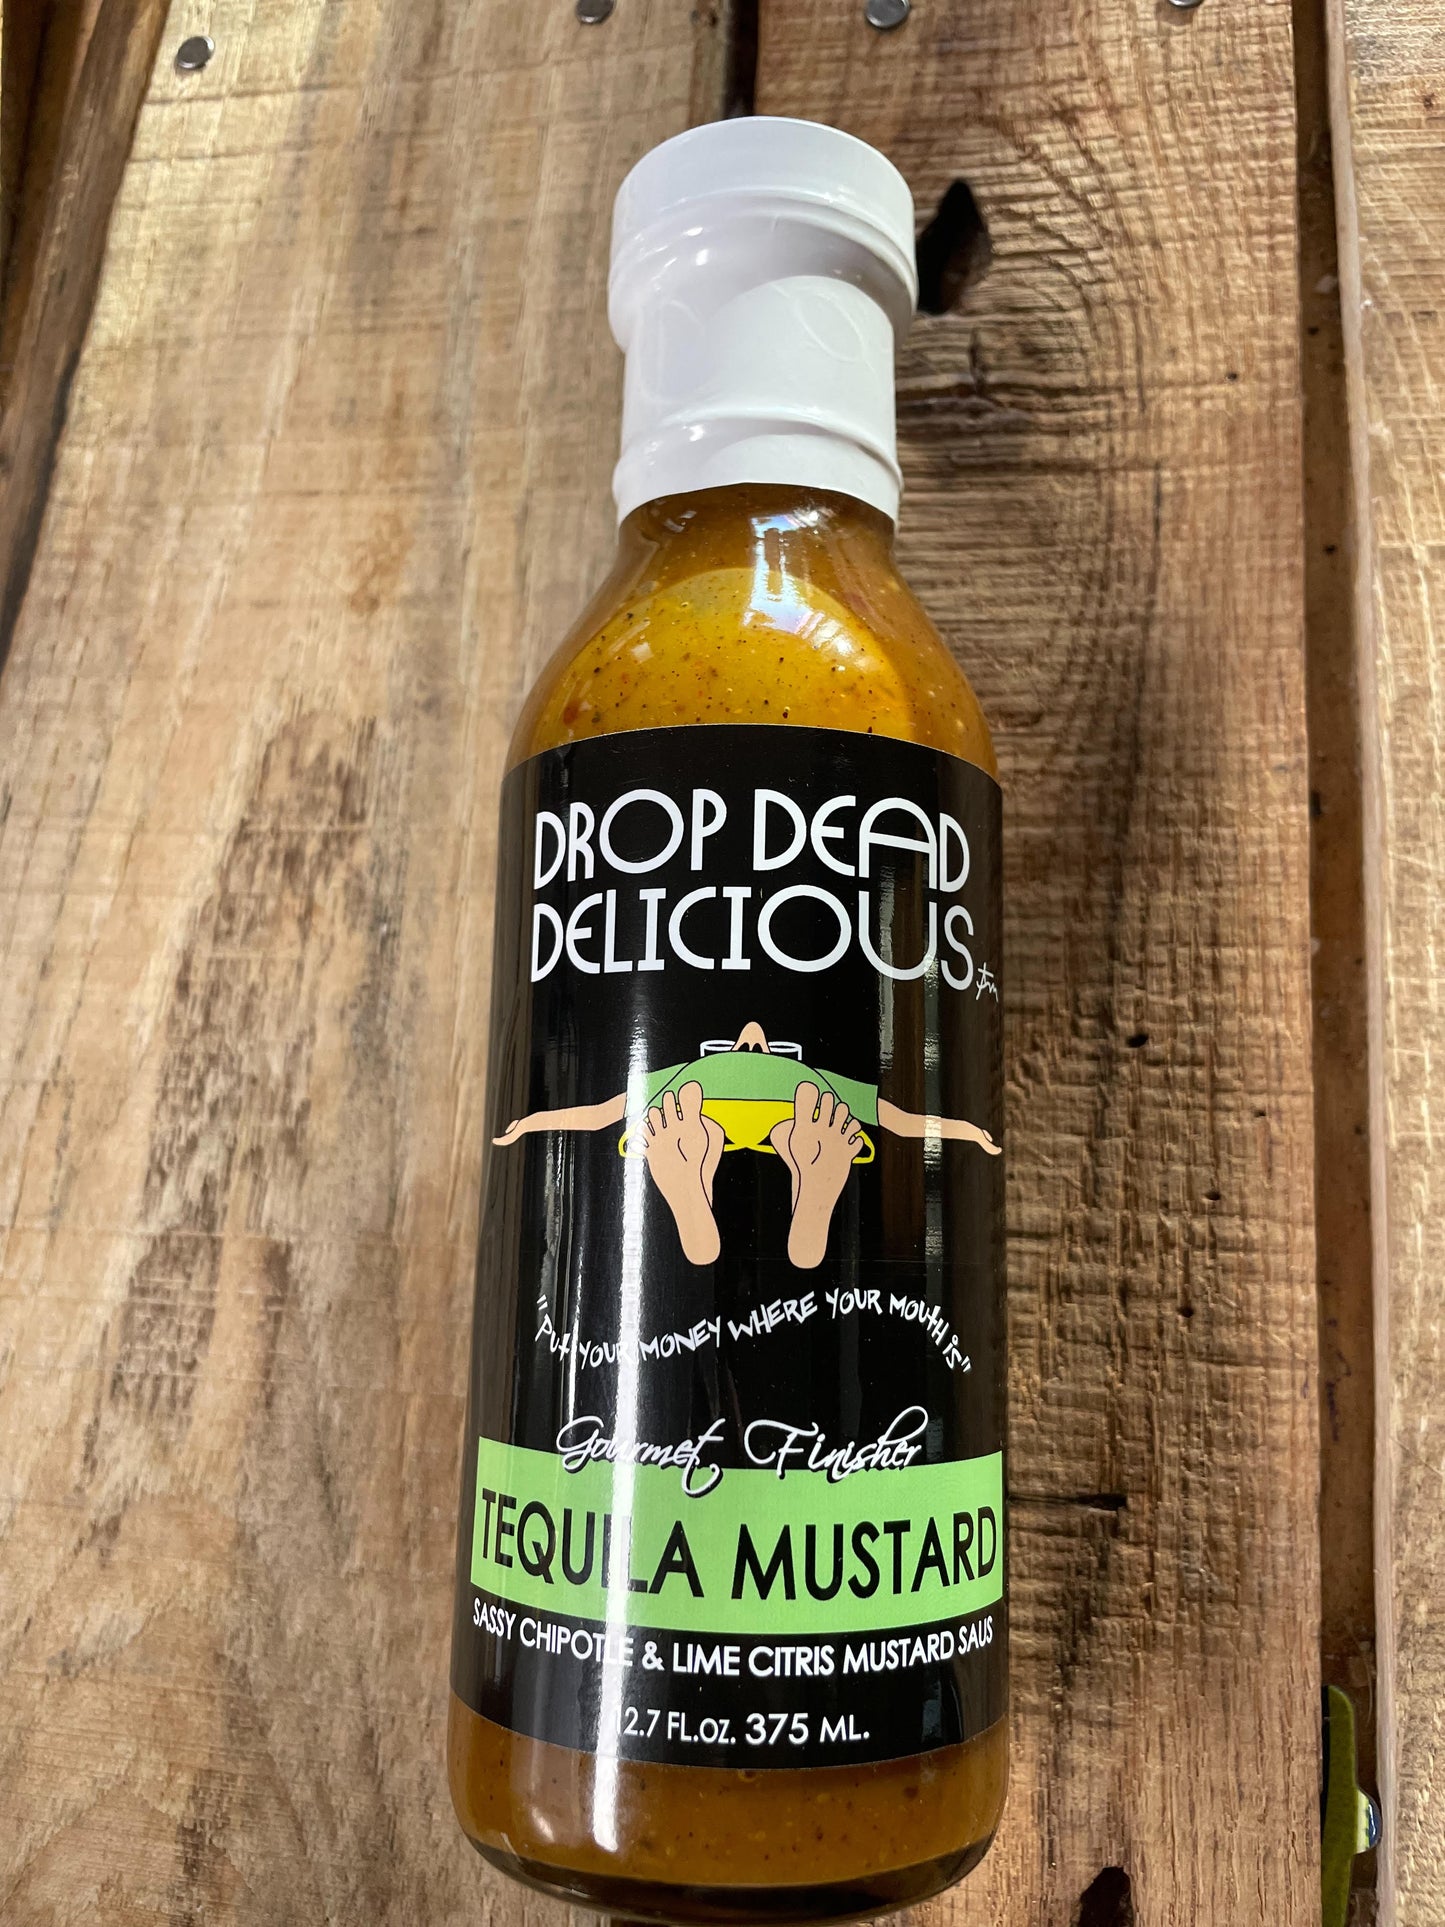 Drop Dead Delicious - Tequila Mustard Sauce